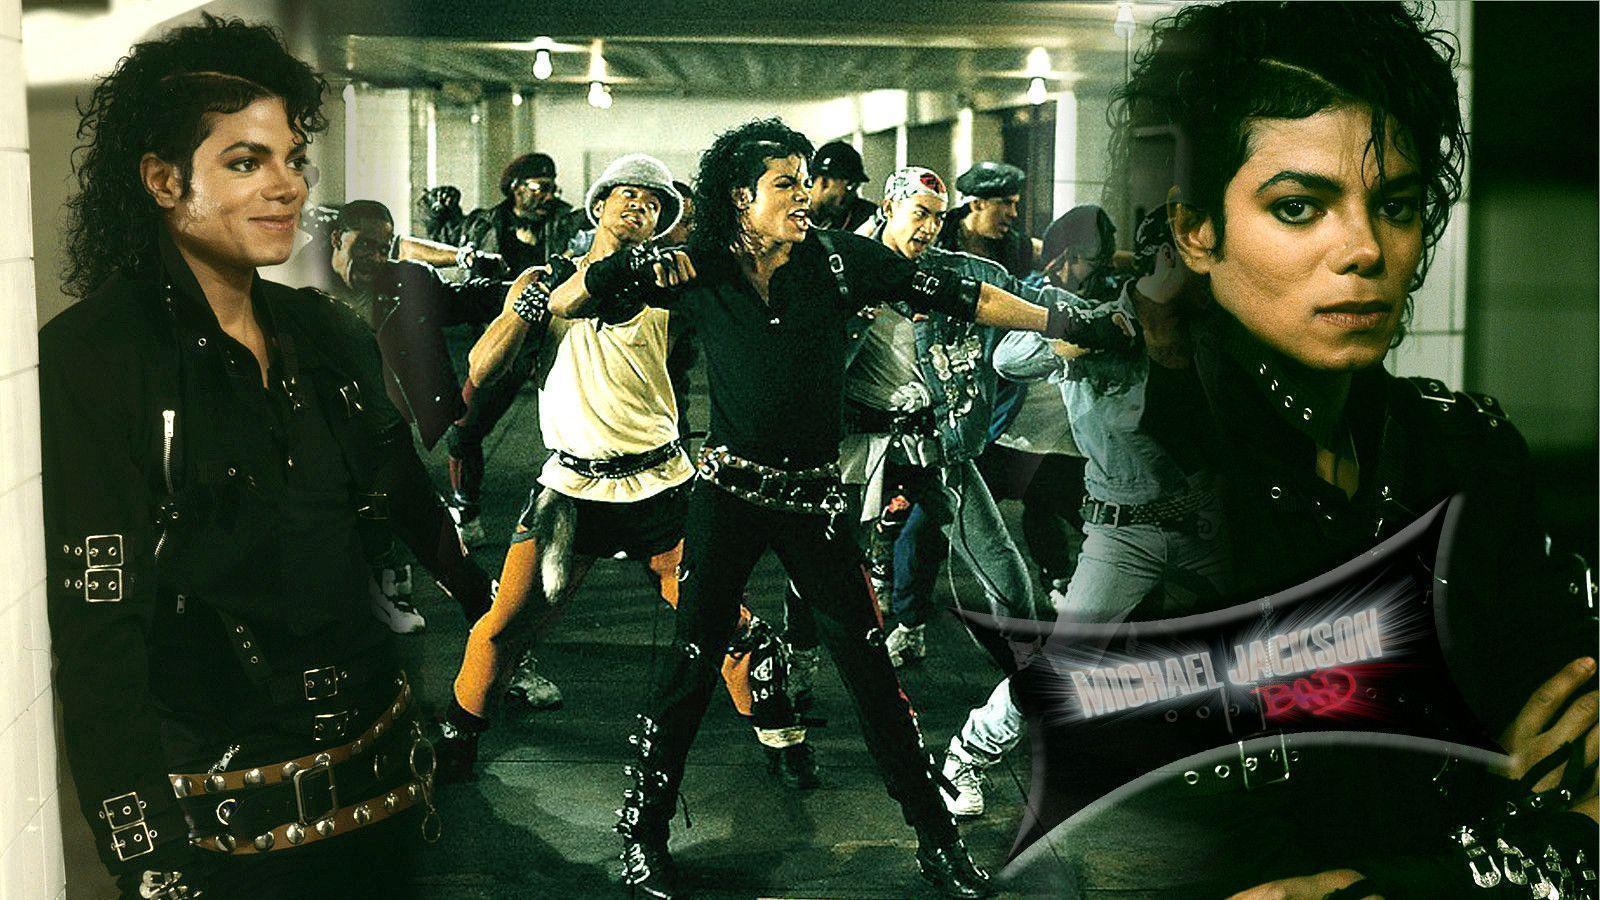 Michael Jackson Bad Wallpaper